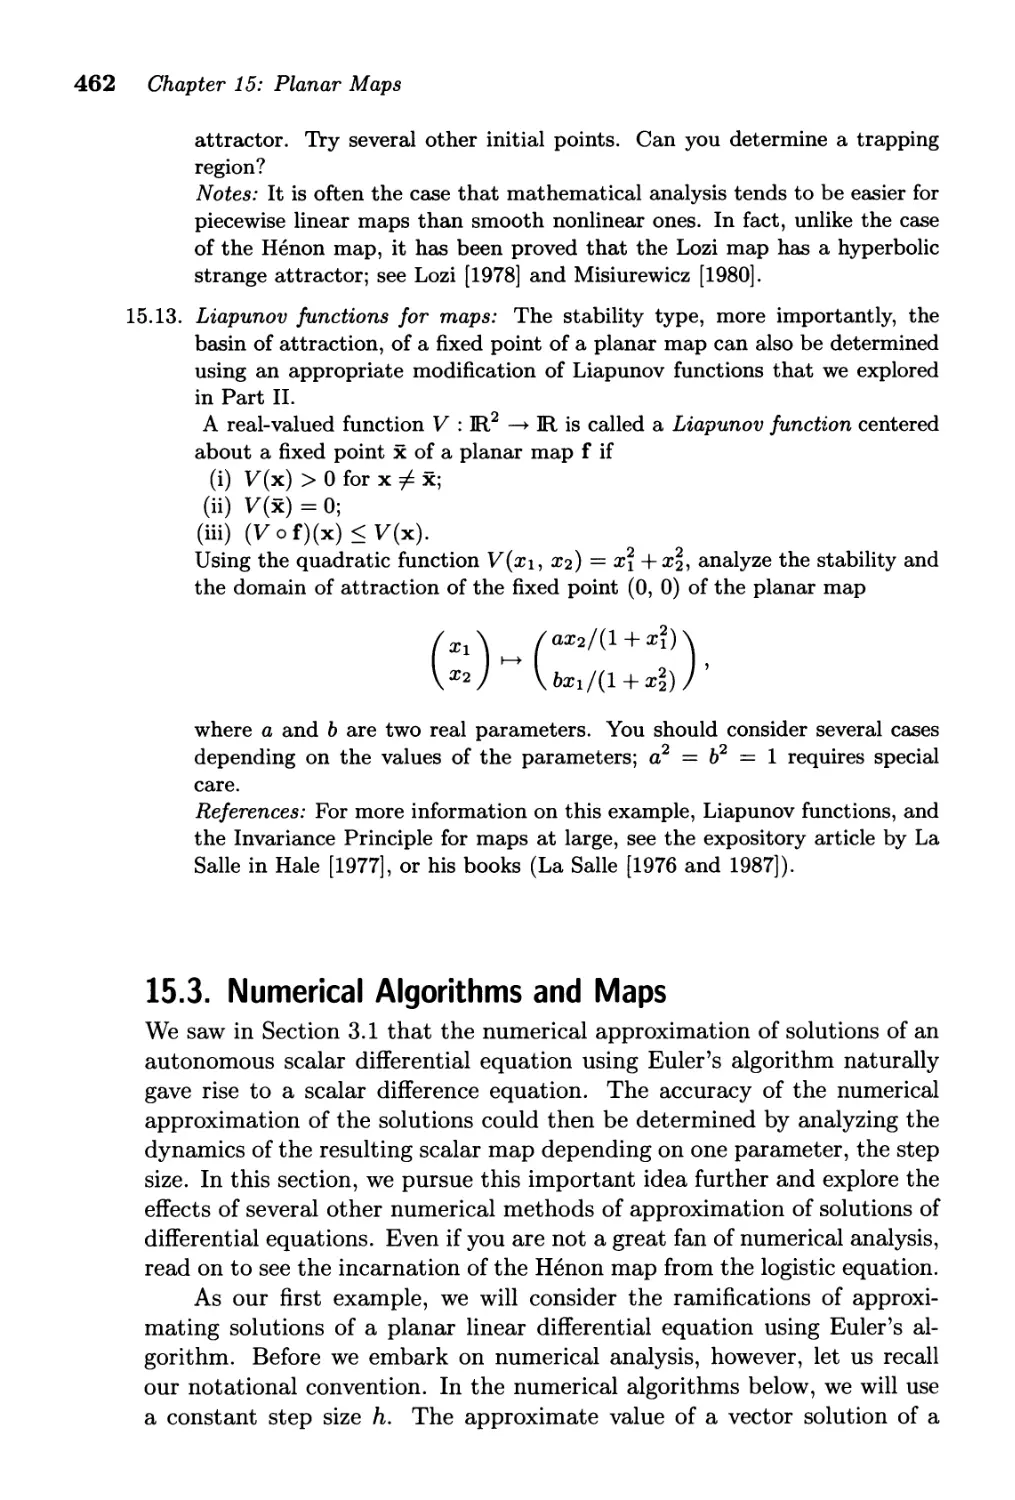 15.3. Numerical Algorithms and Maps